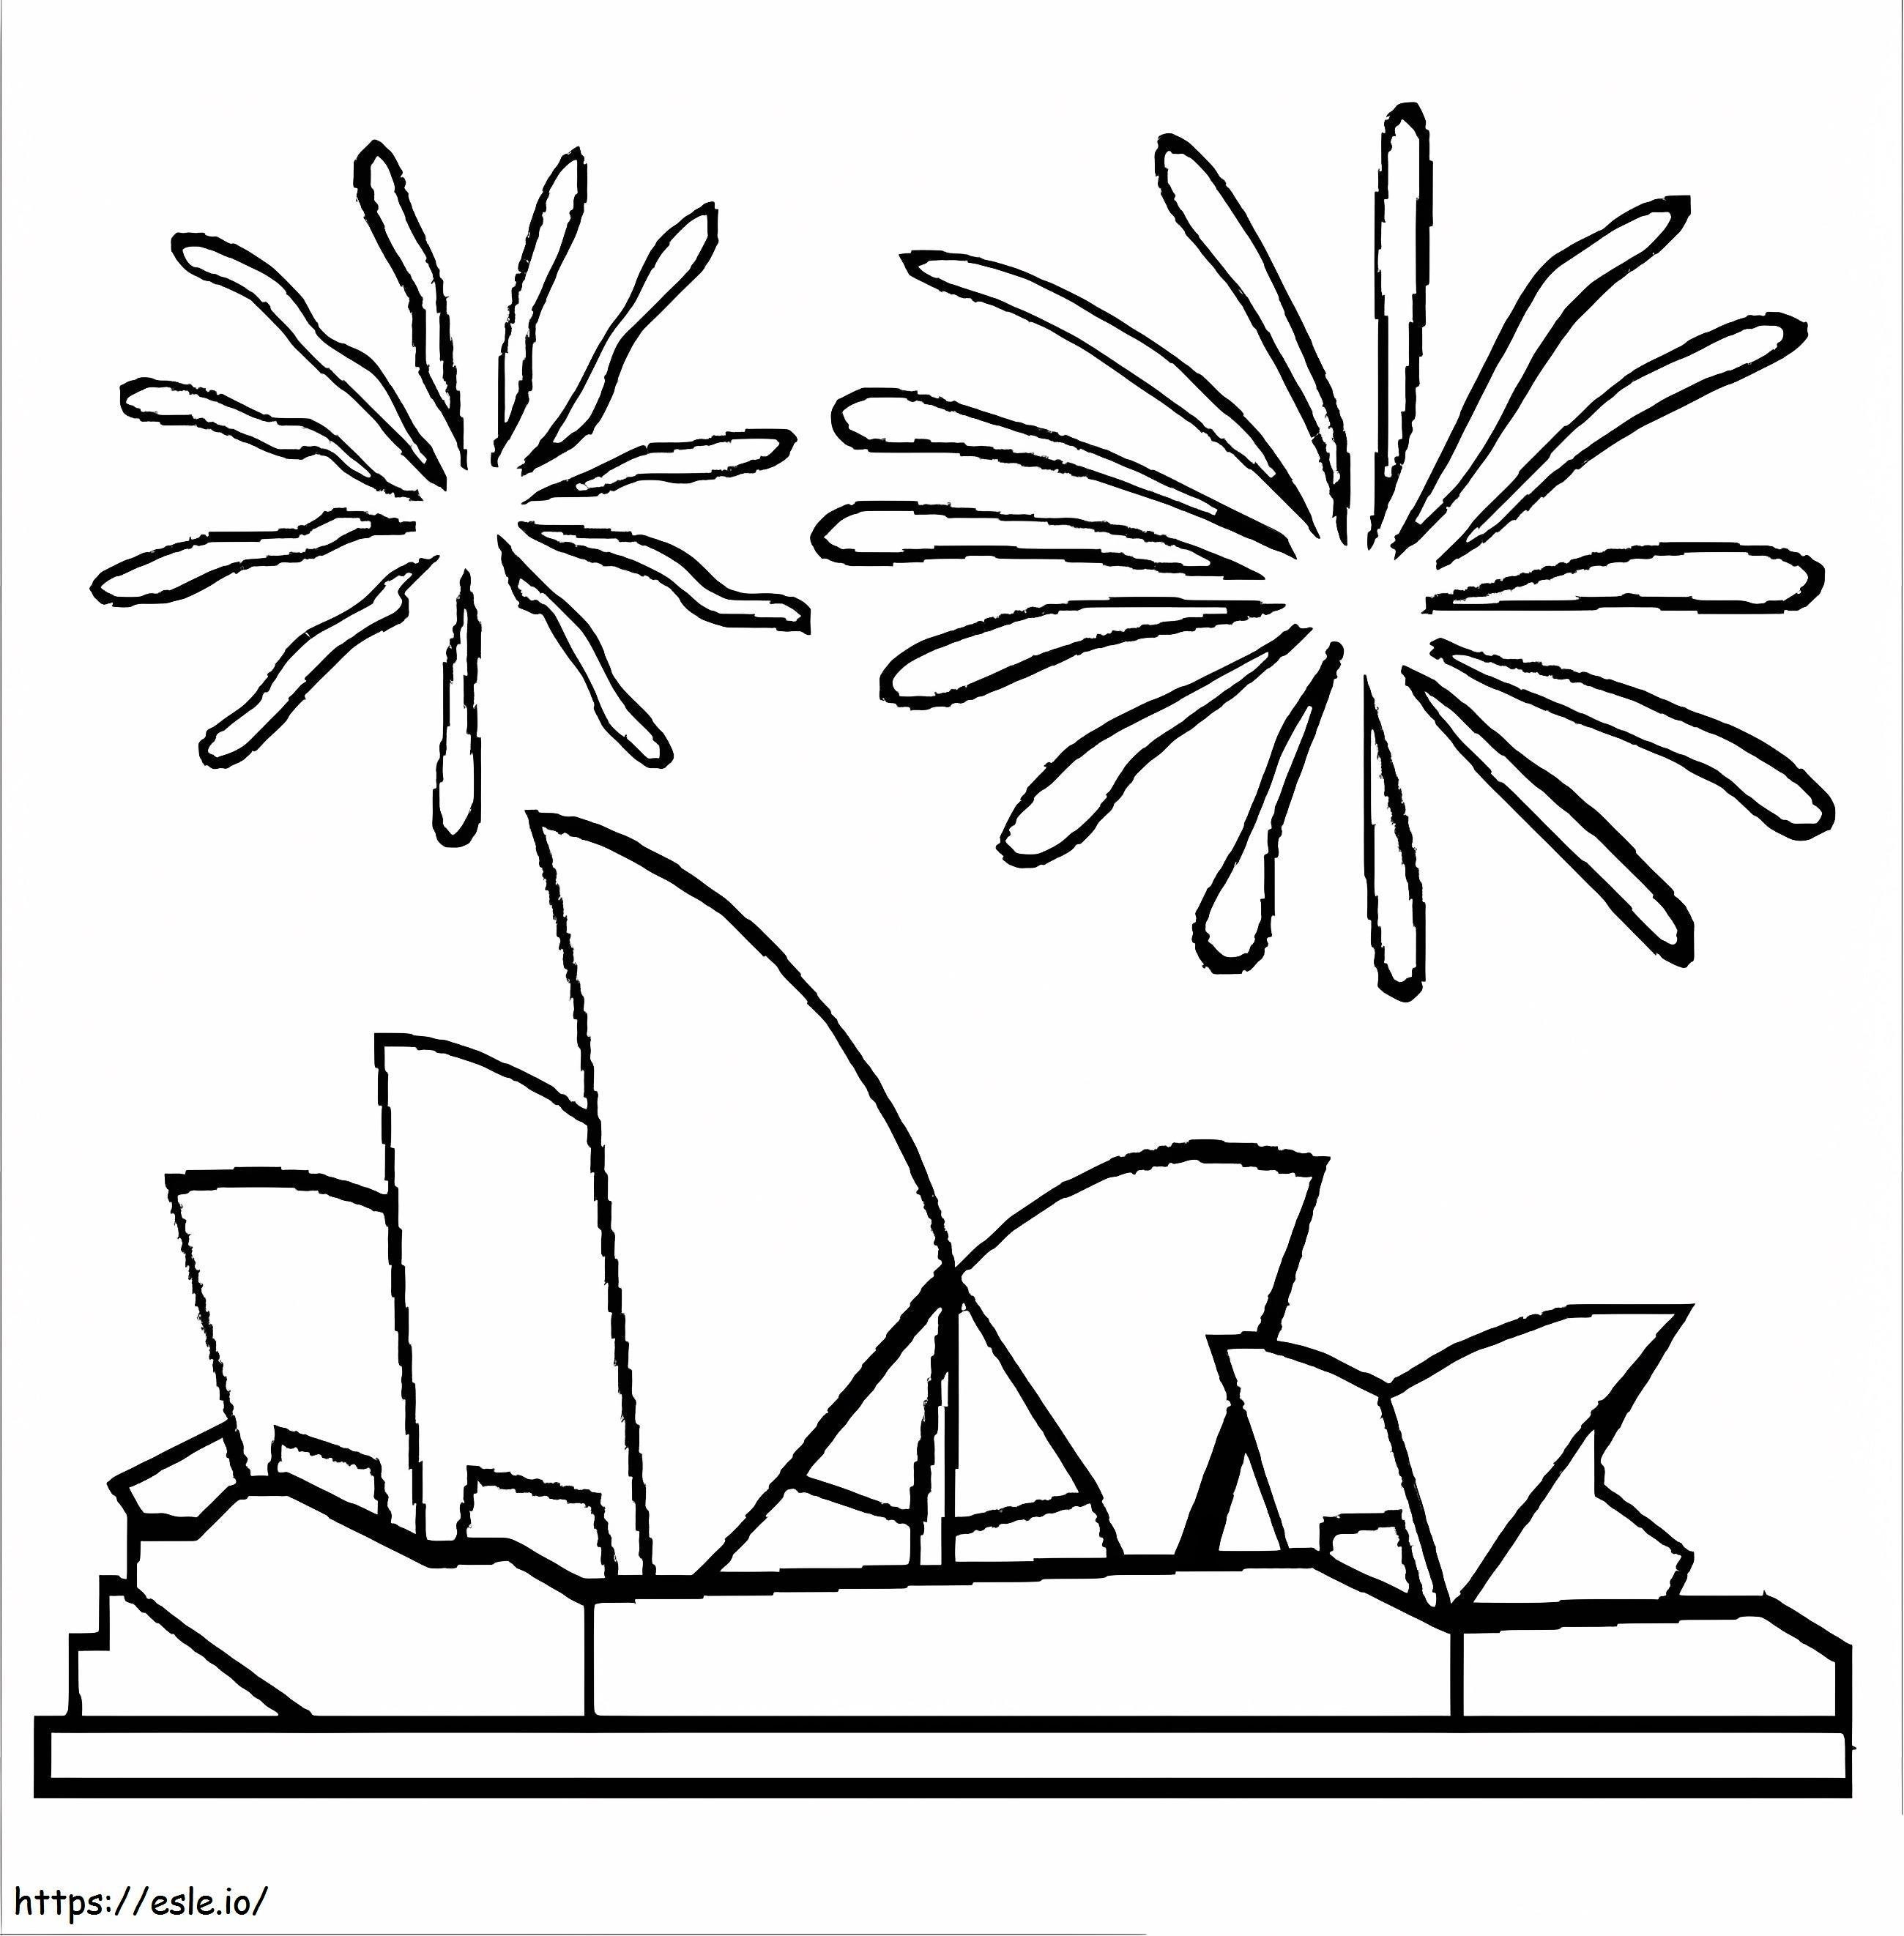 Sydney Opera House 5 ausmalbilder